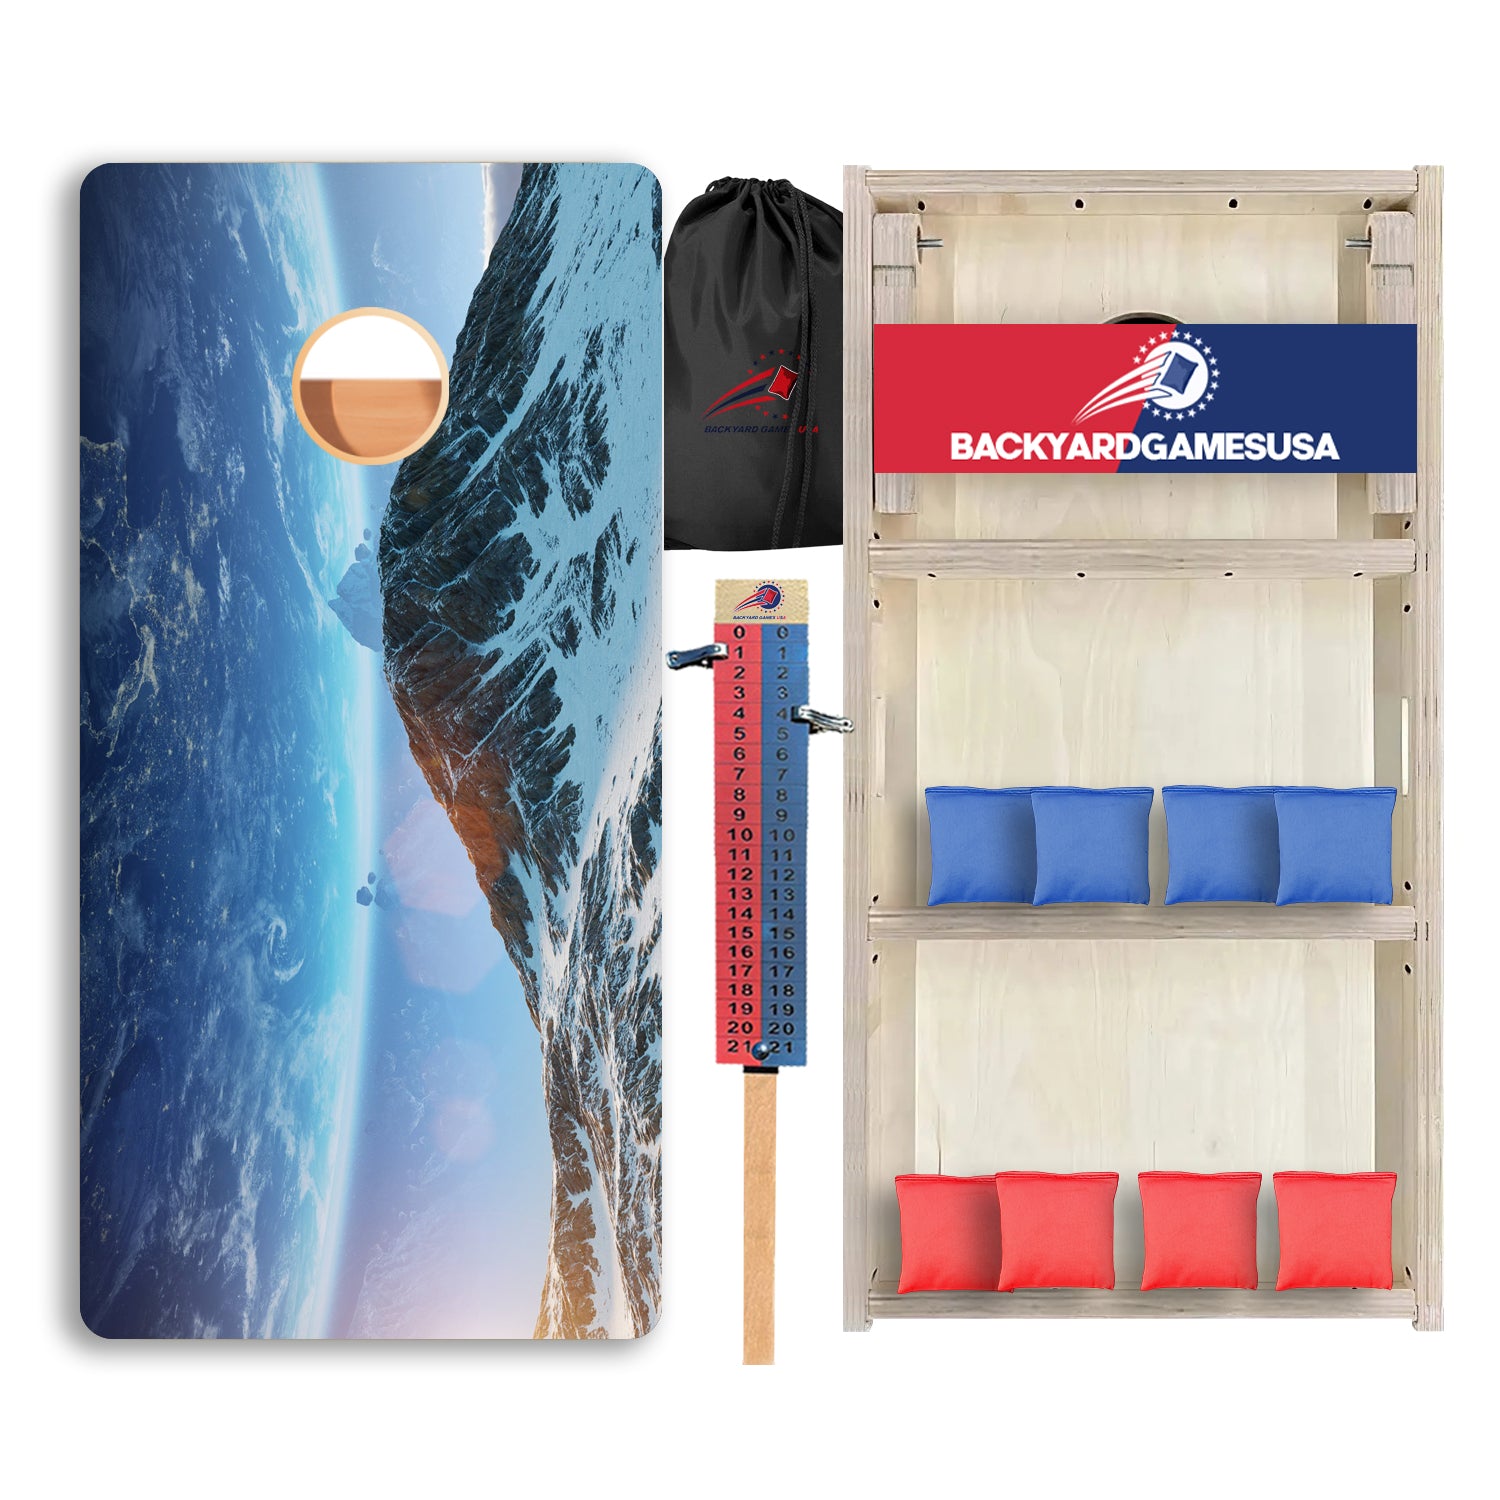 Mountain Planet Professional Cornhole Boards